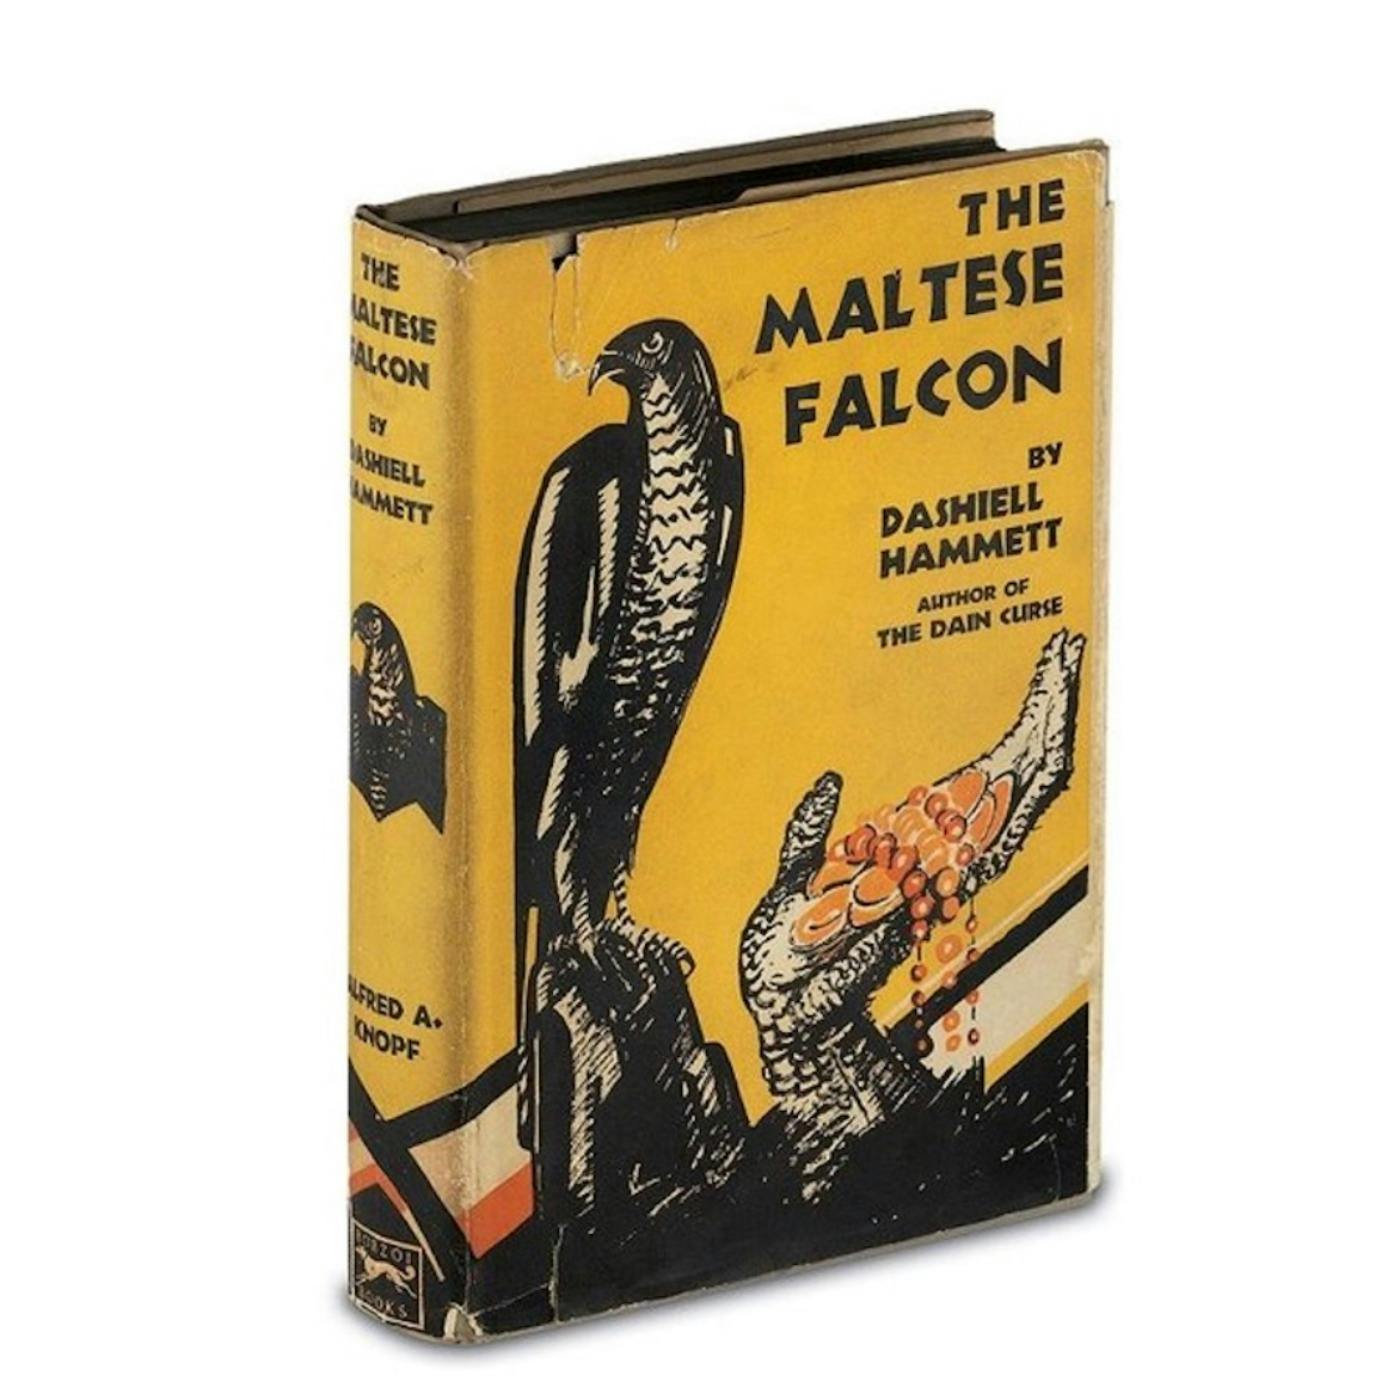 The Maltese Falcon by Dashiell Hammet